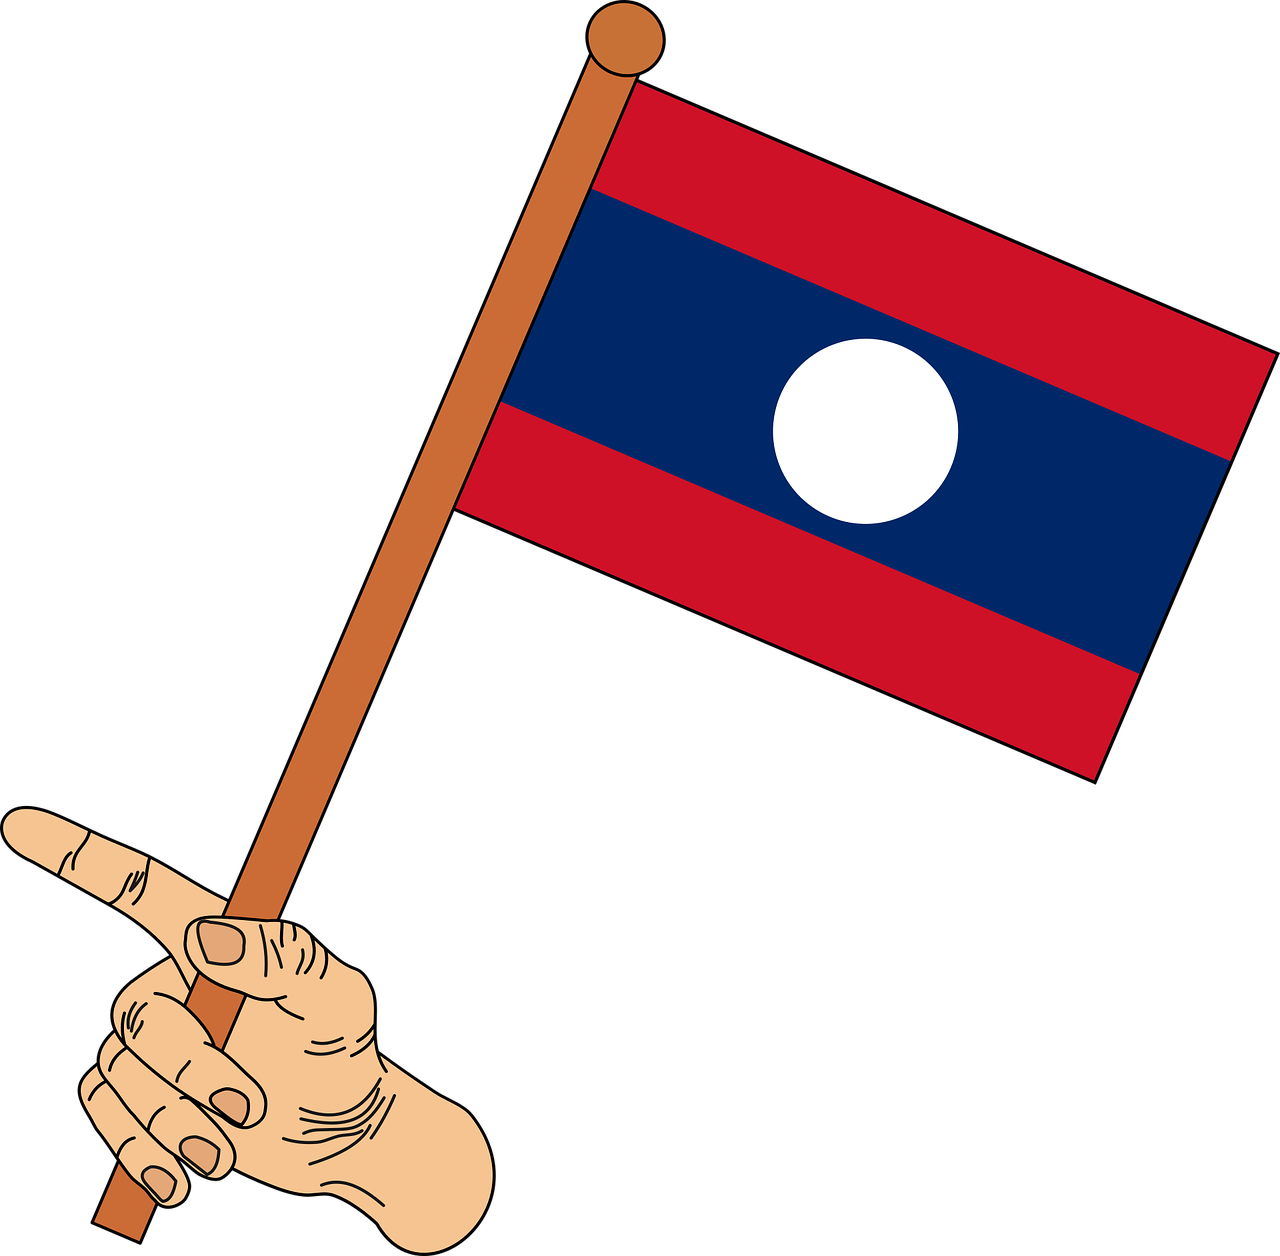 Laos Flagin Hand Illustration PNG